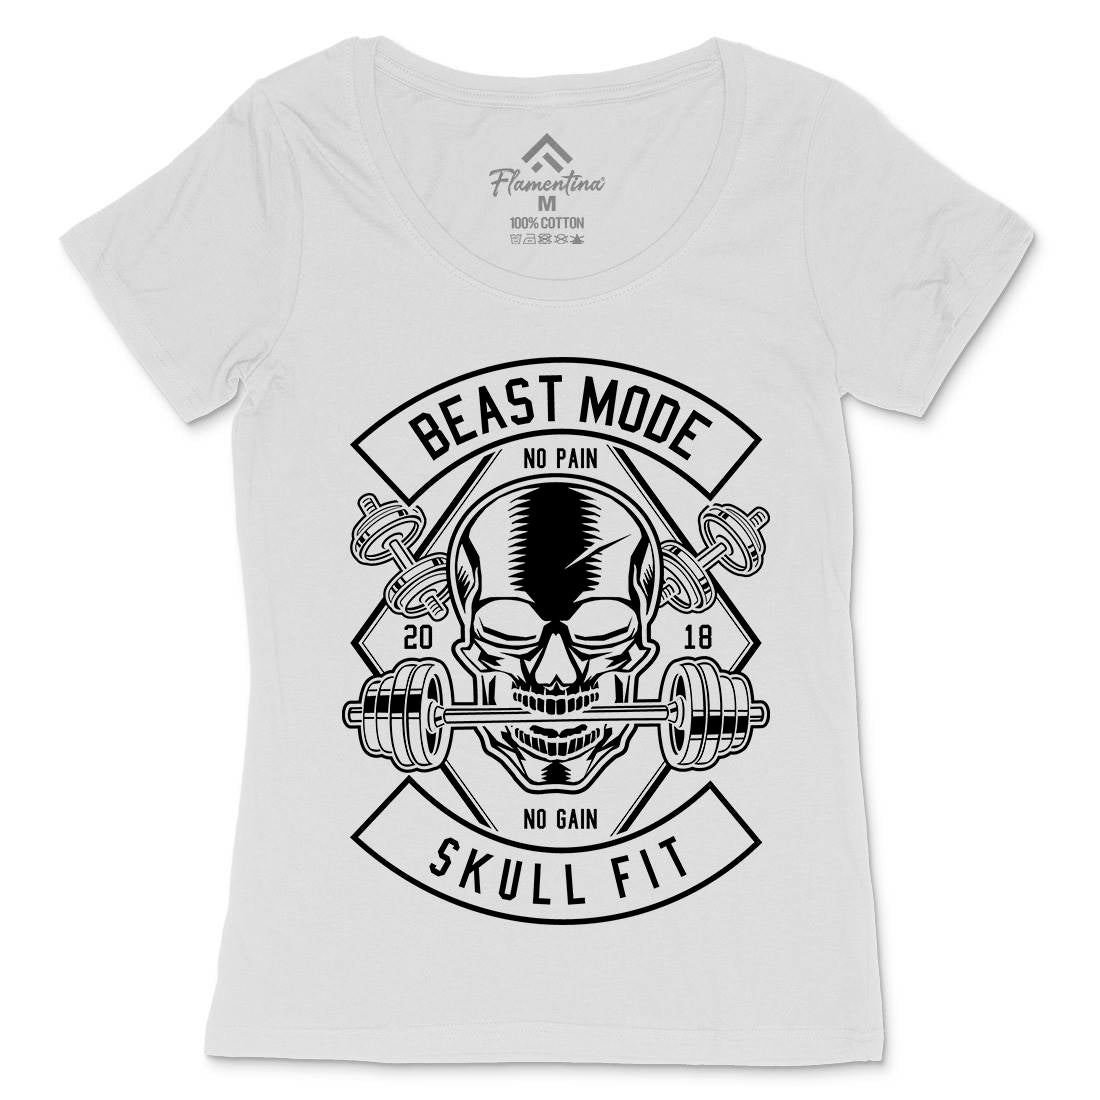 Skull Fit Womens Scoop Neck T-Shirt Gym B628